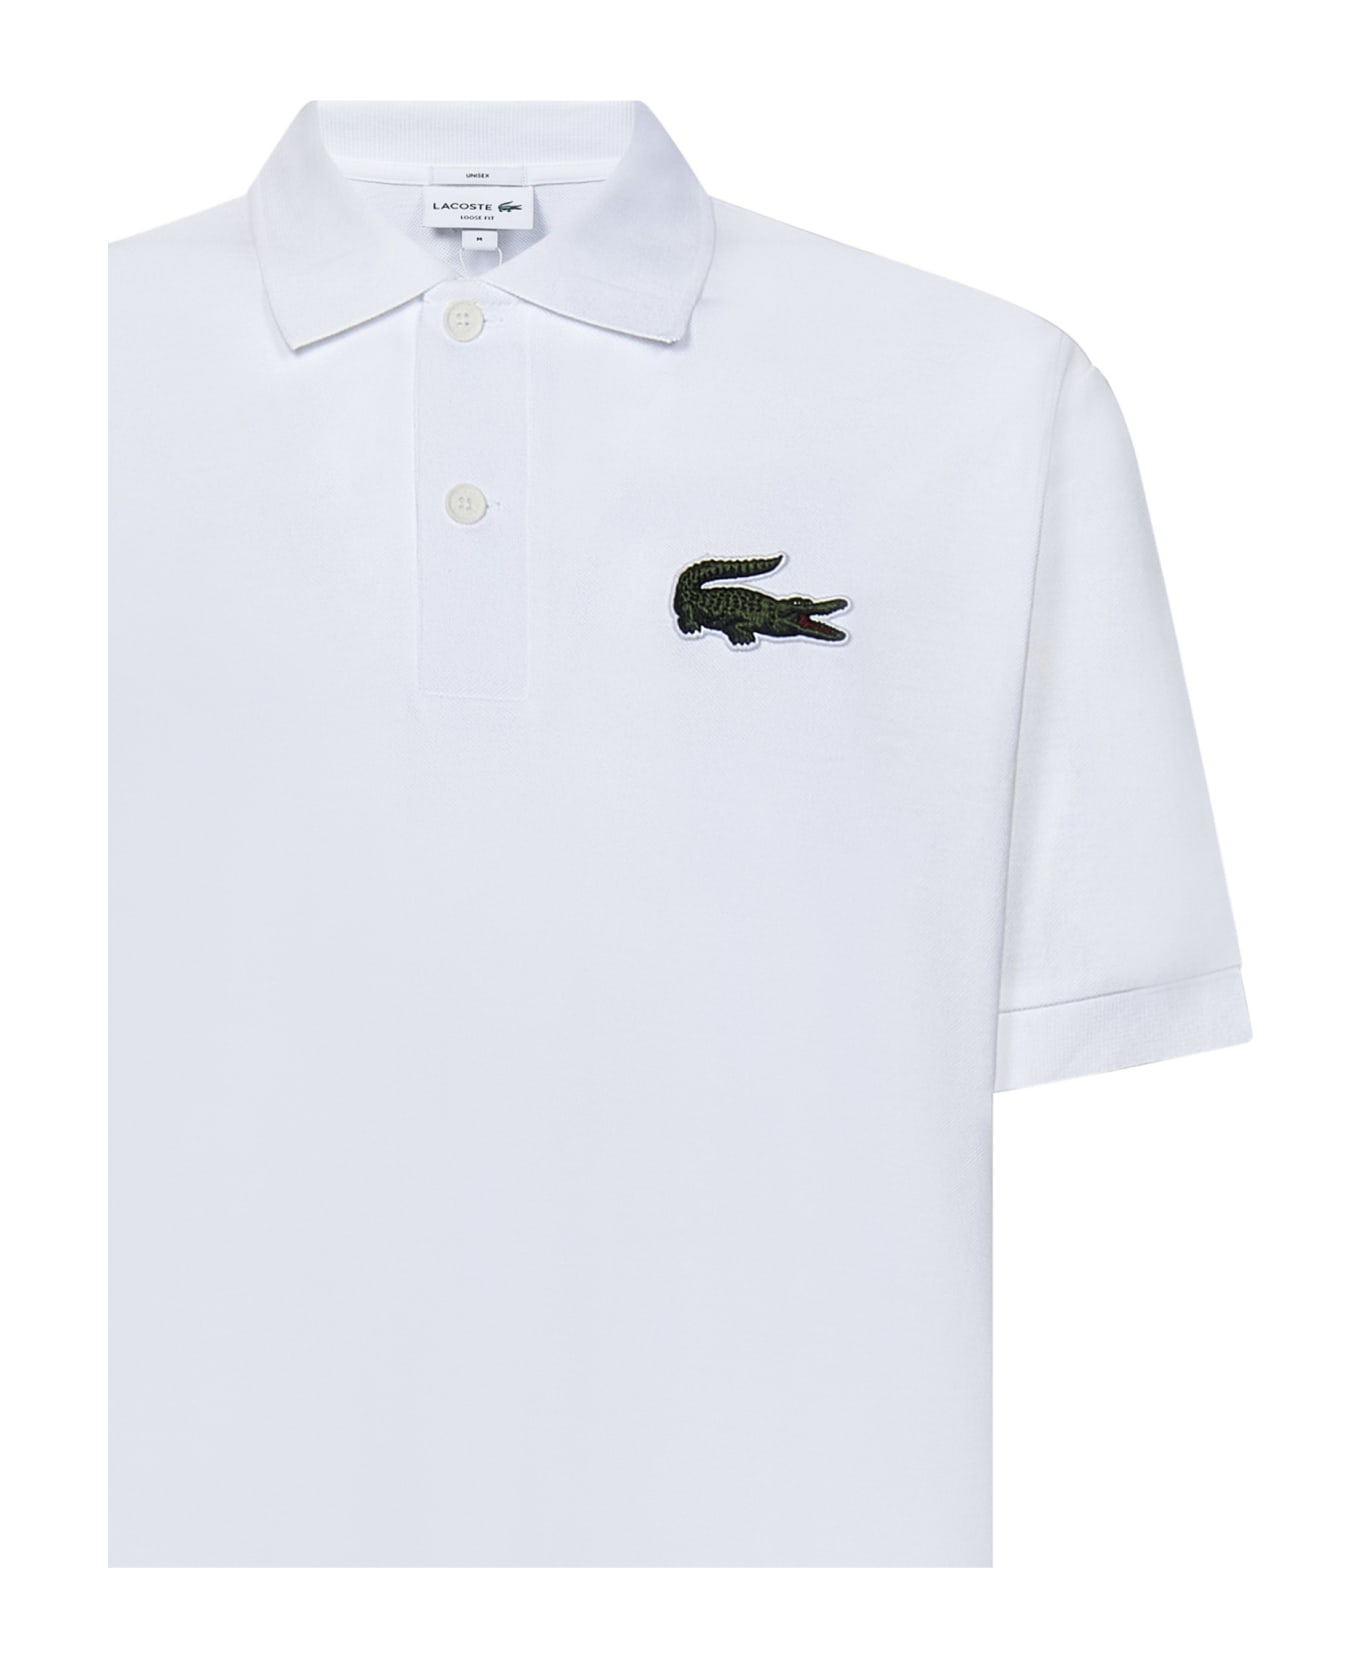 Lacoste Original Polo L.12.12 Loose Fit Polo Shirt - White